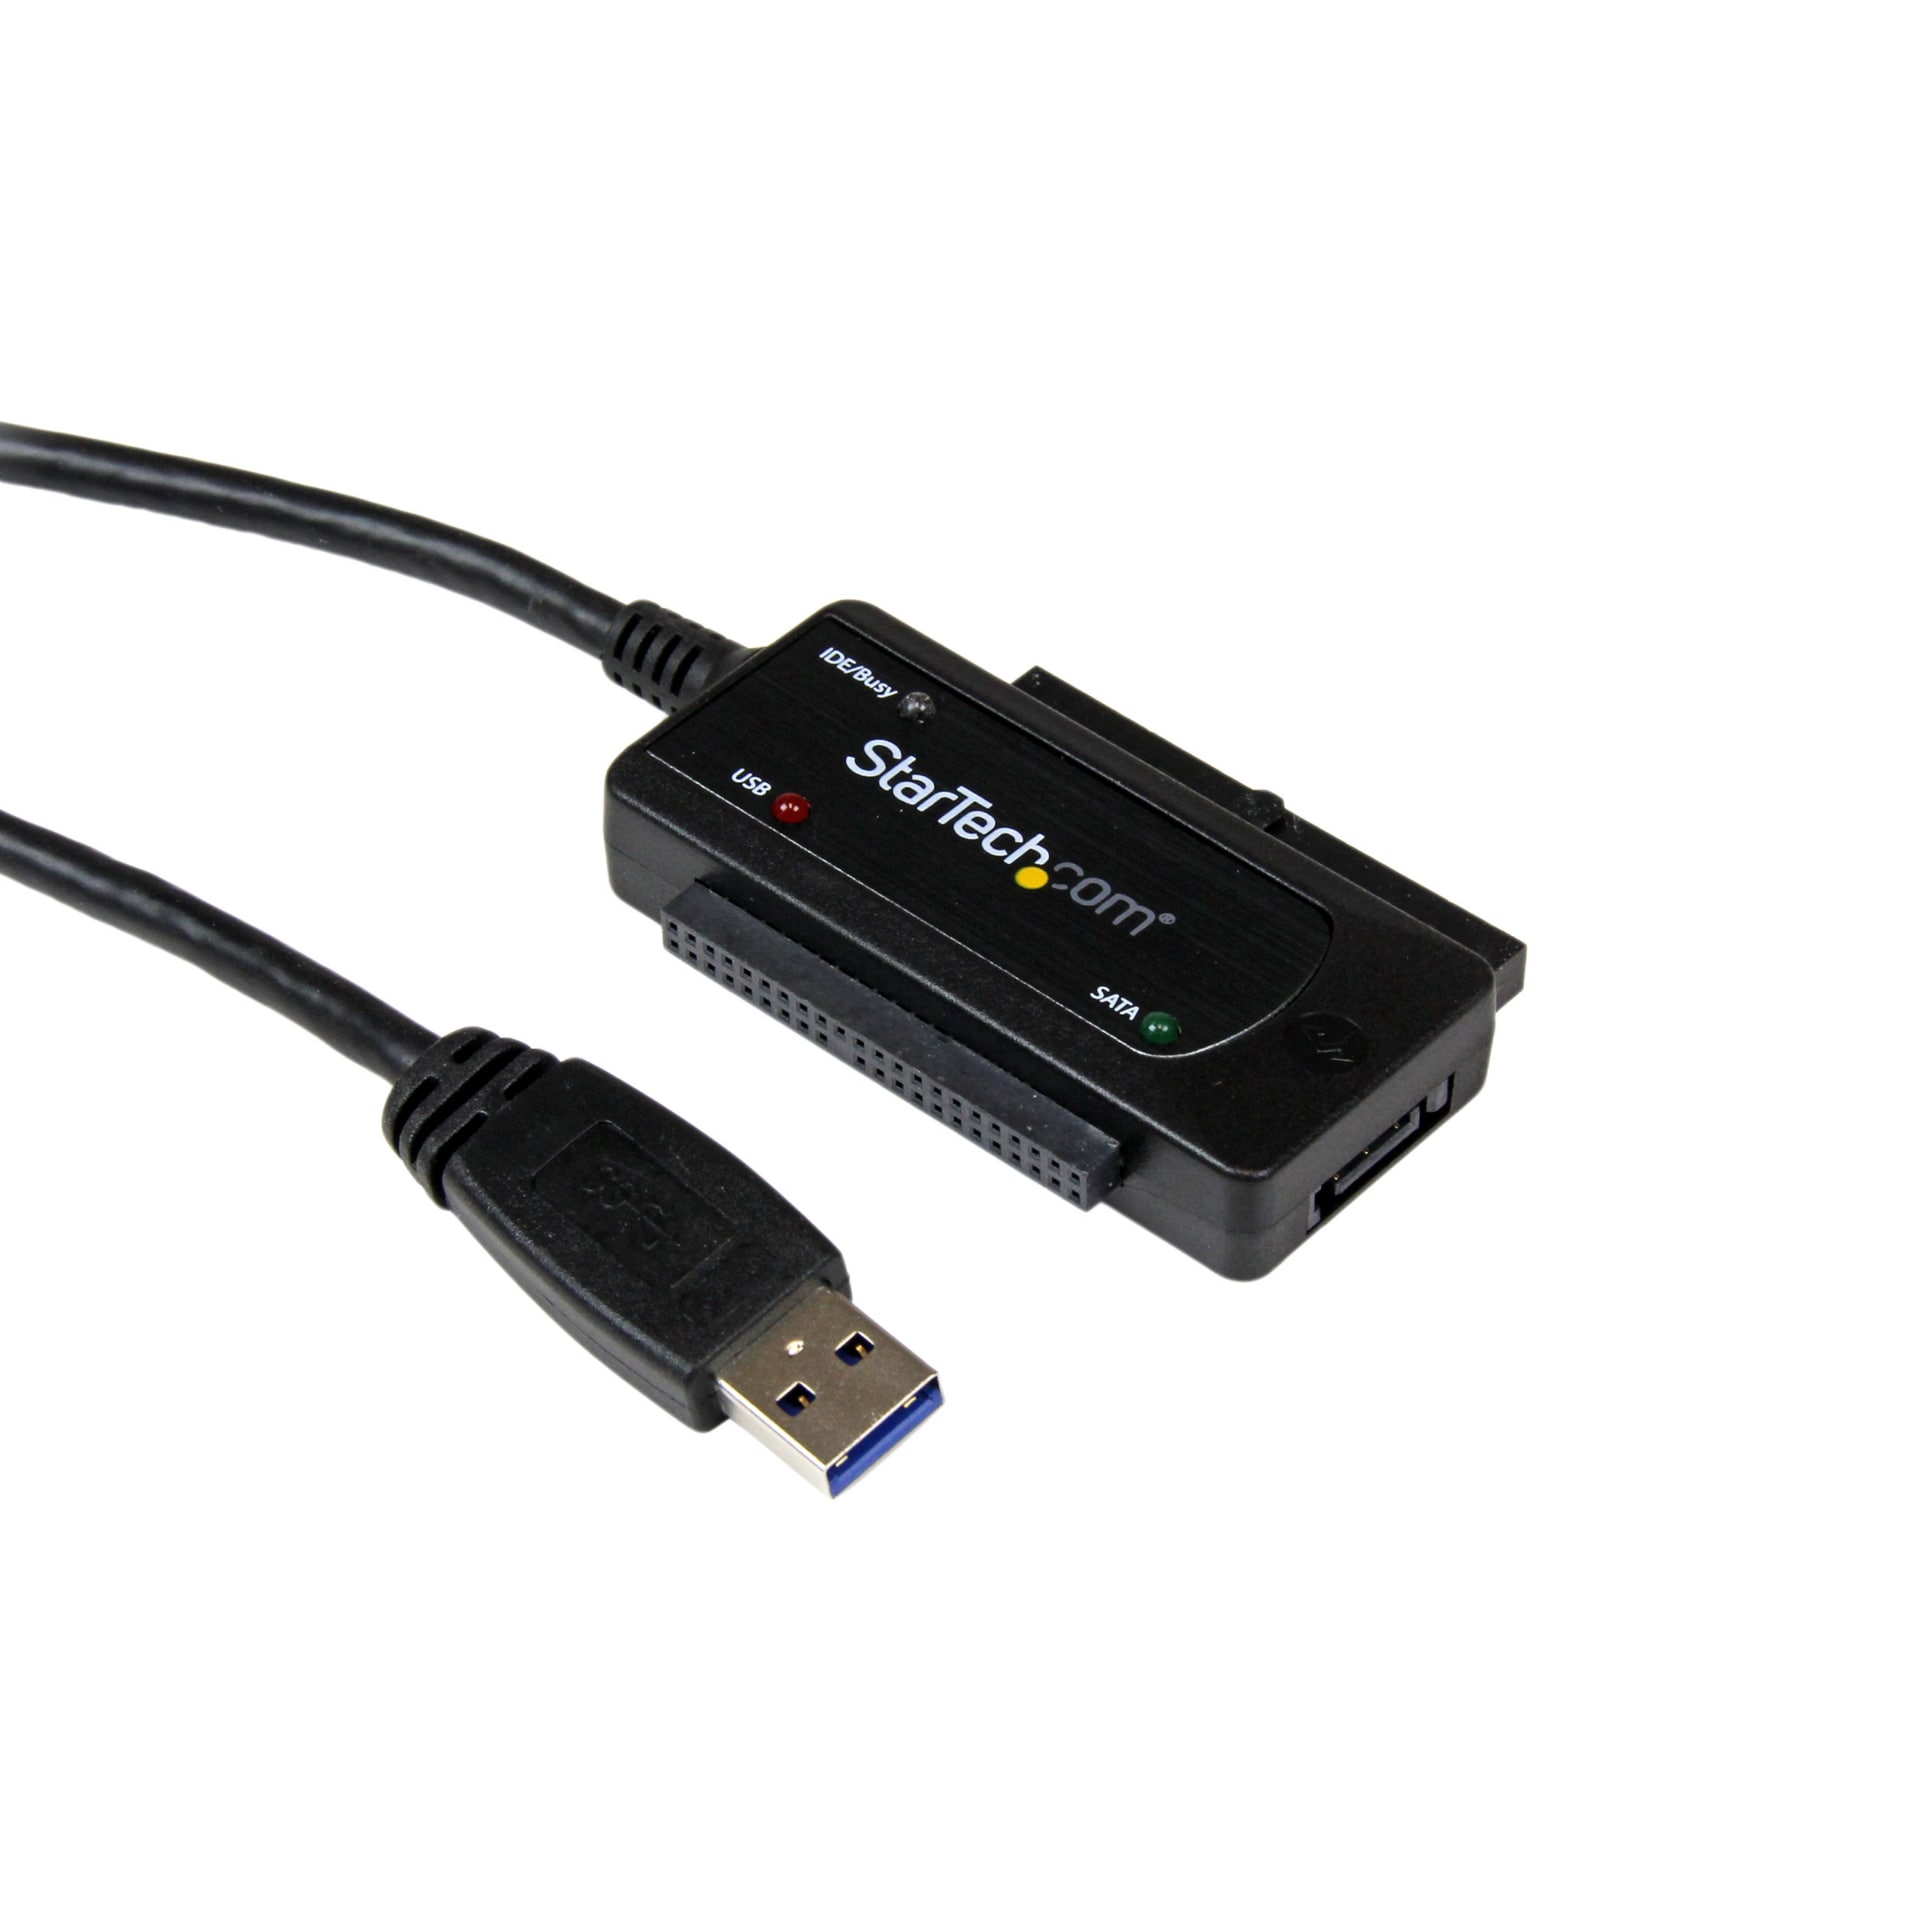 StarTech.com USB 3.0 to SATA or IDE Drive Adapter Converter - USB3SSATAIDE - Storage Mounts & Enclosures - CDW.com